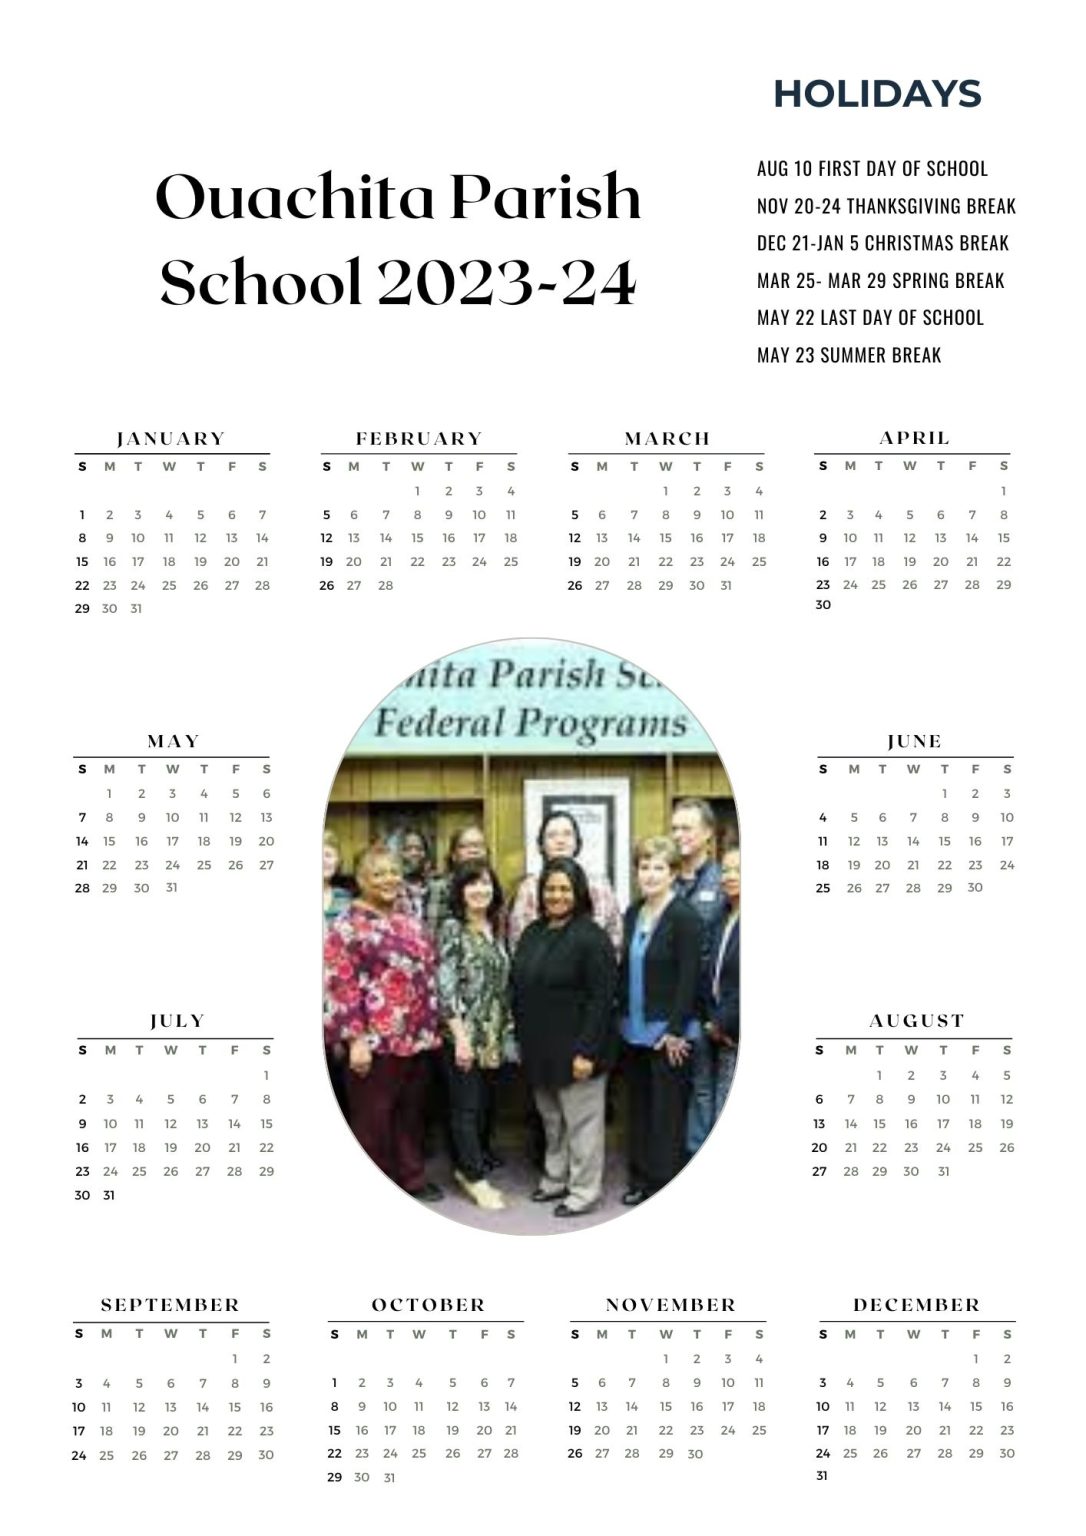 Ouachita Parish School Calendar Holidays 20232024